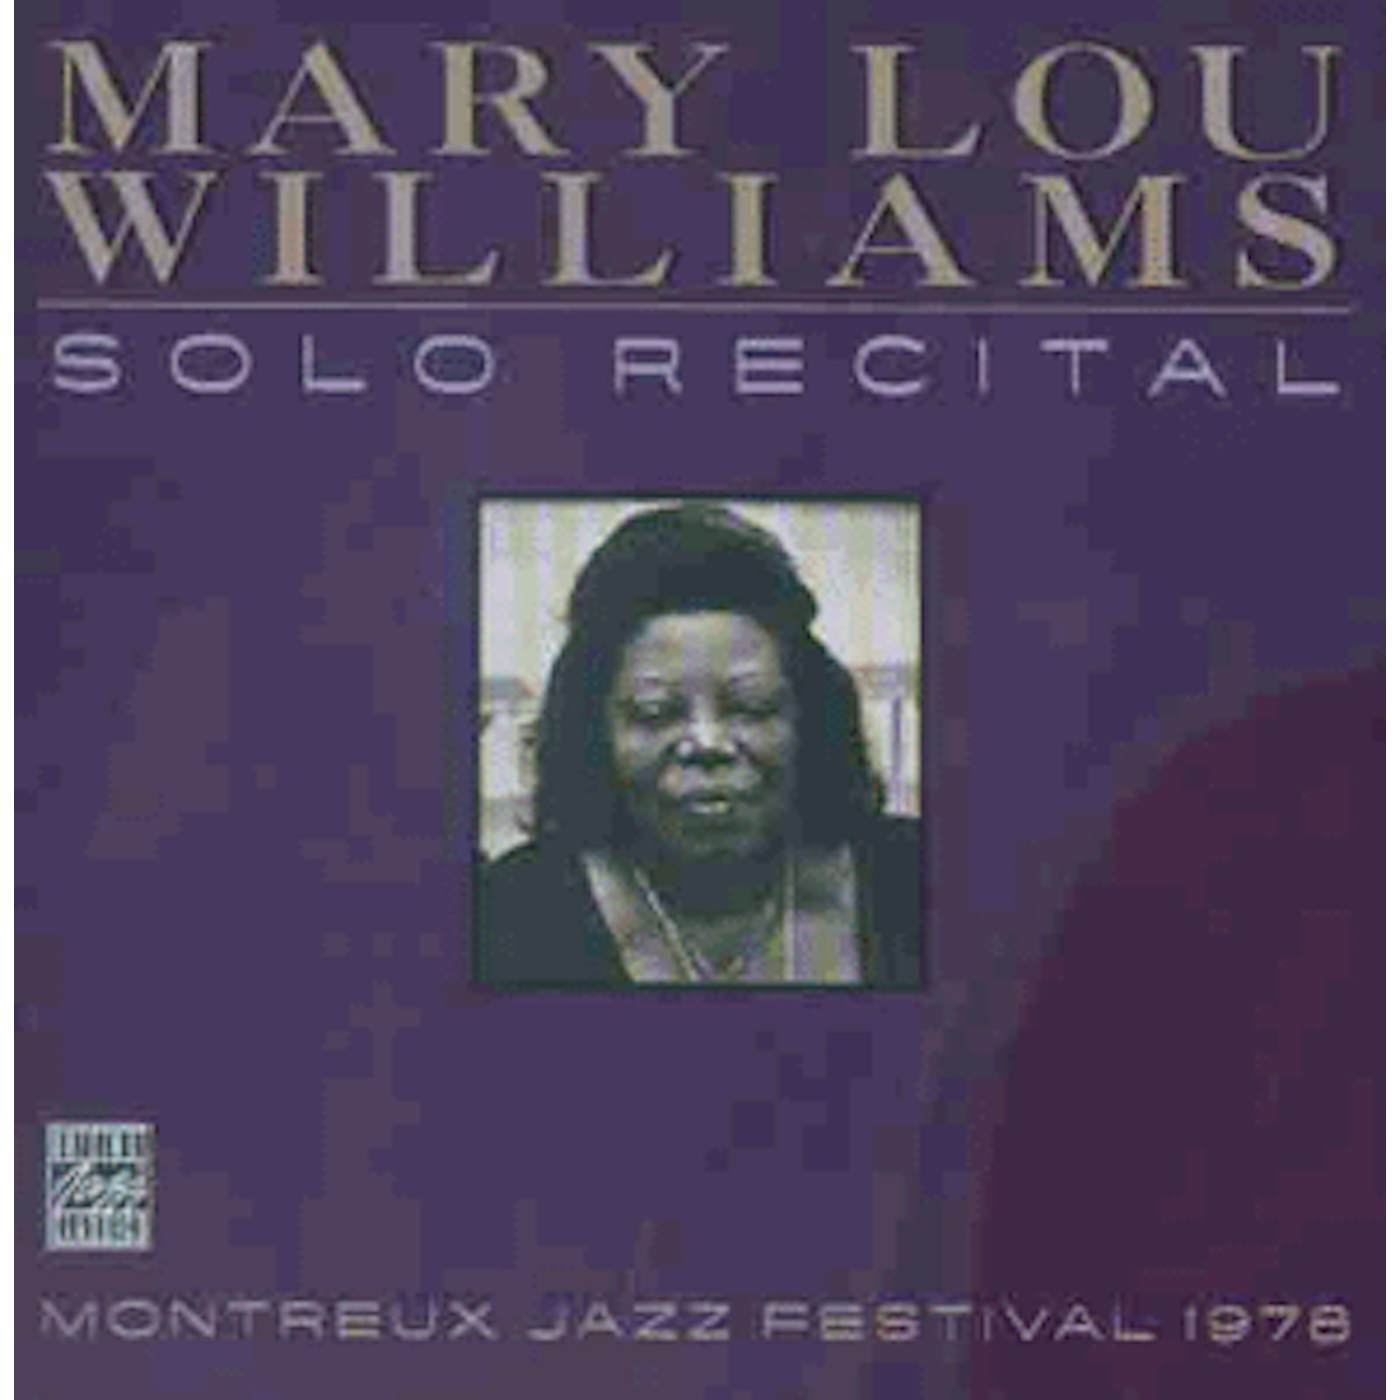 Mary Lou Williams SOLO RECITAL: MONTEREY JAZZ FESTIVAL 1978 CD